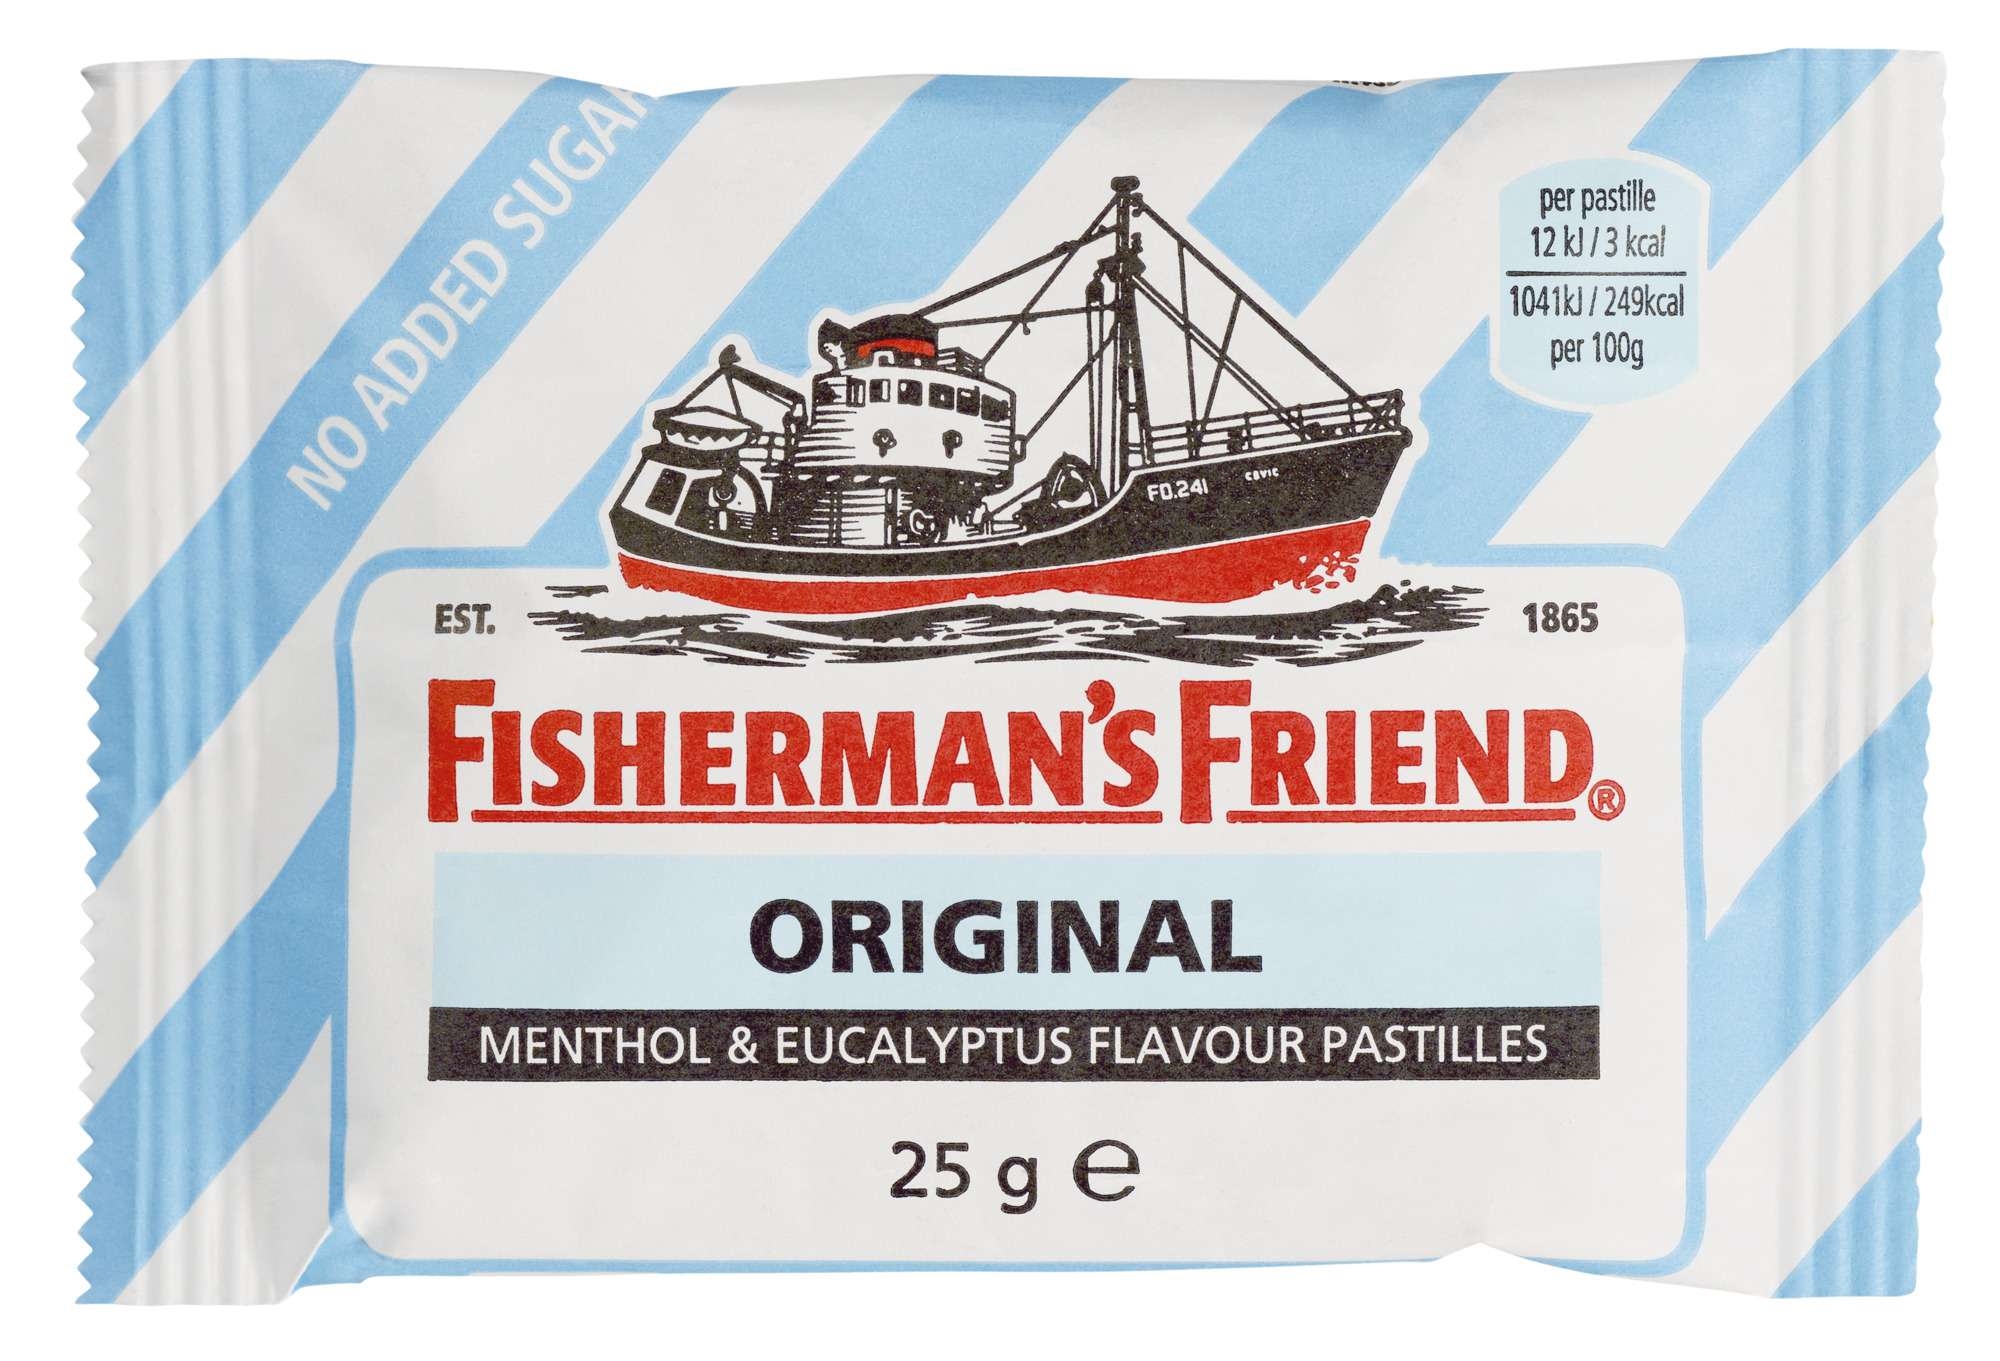 Fisherman's friend orig blue str 25g